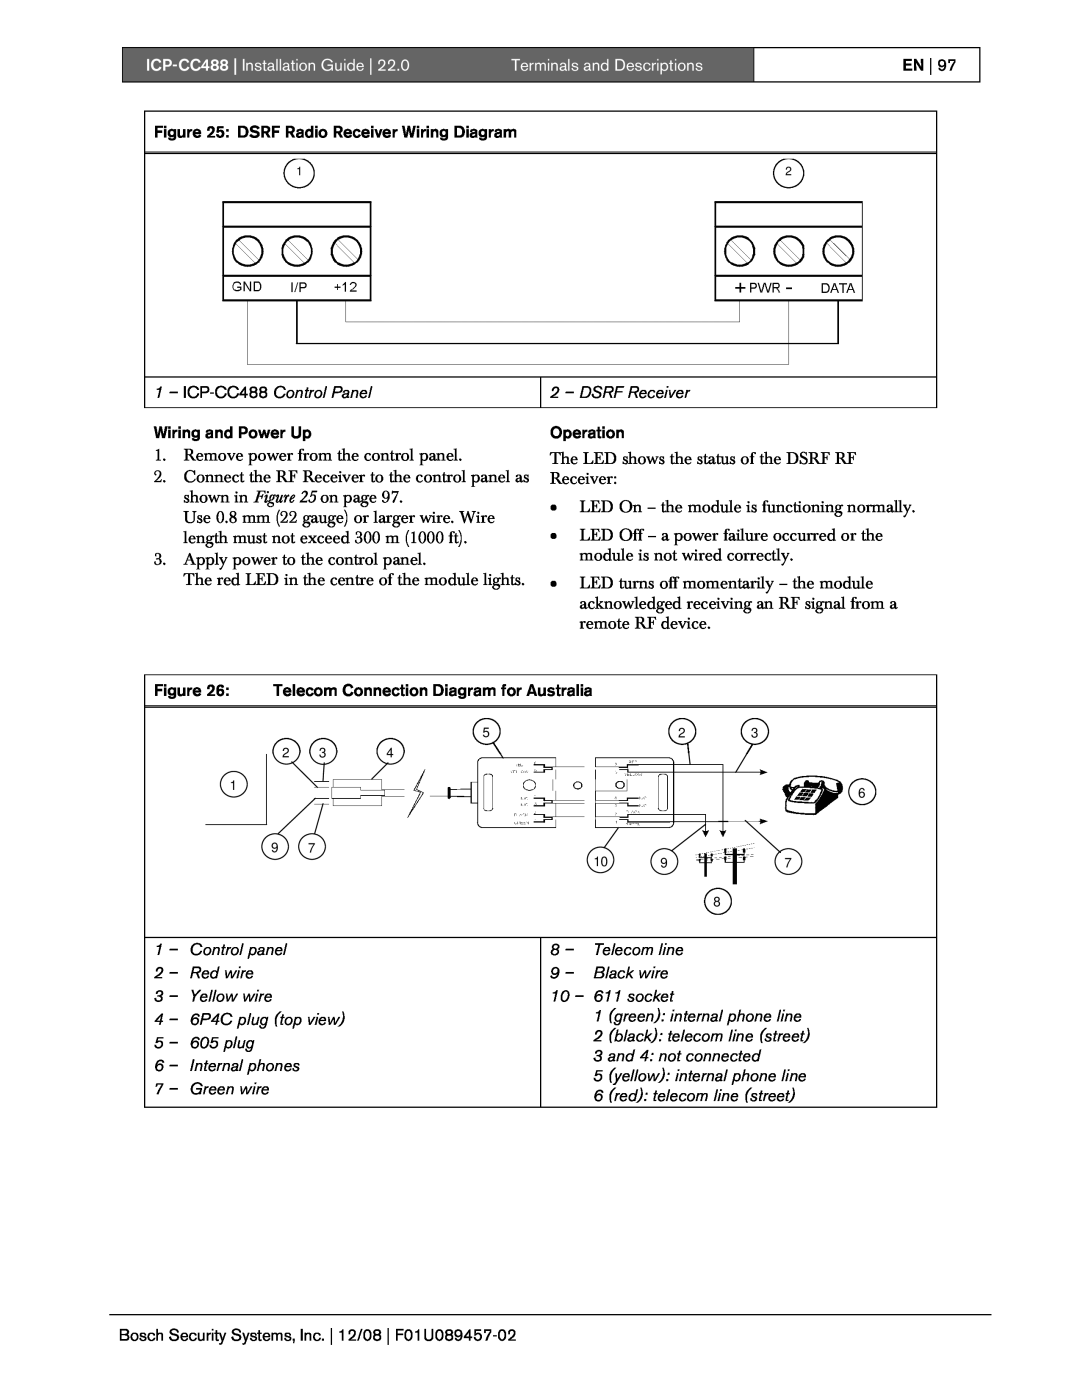 Bosch Appliances ICP-CC488| Installation Guide, Terminals and Descriptions, En, DSRF Radio Receiver Wiring Diagram 